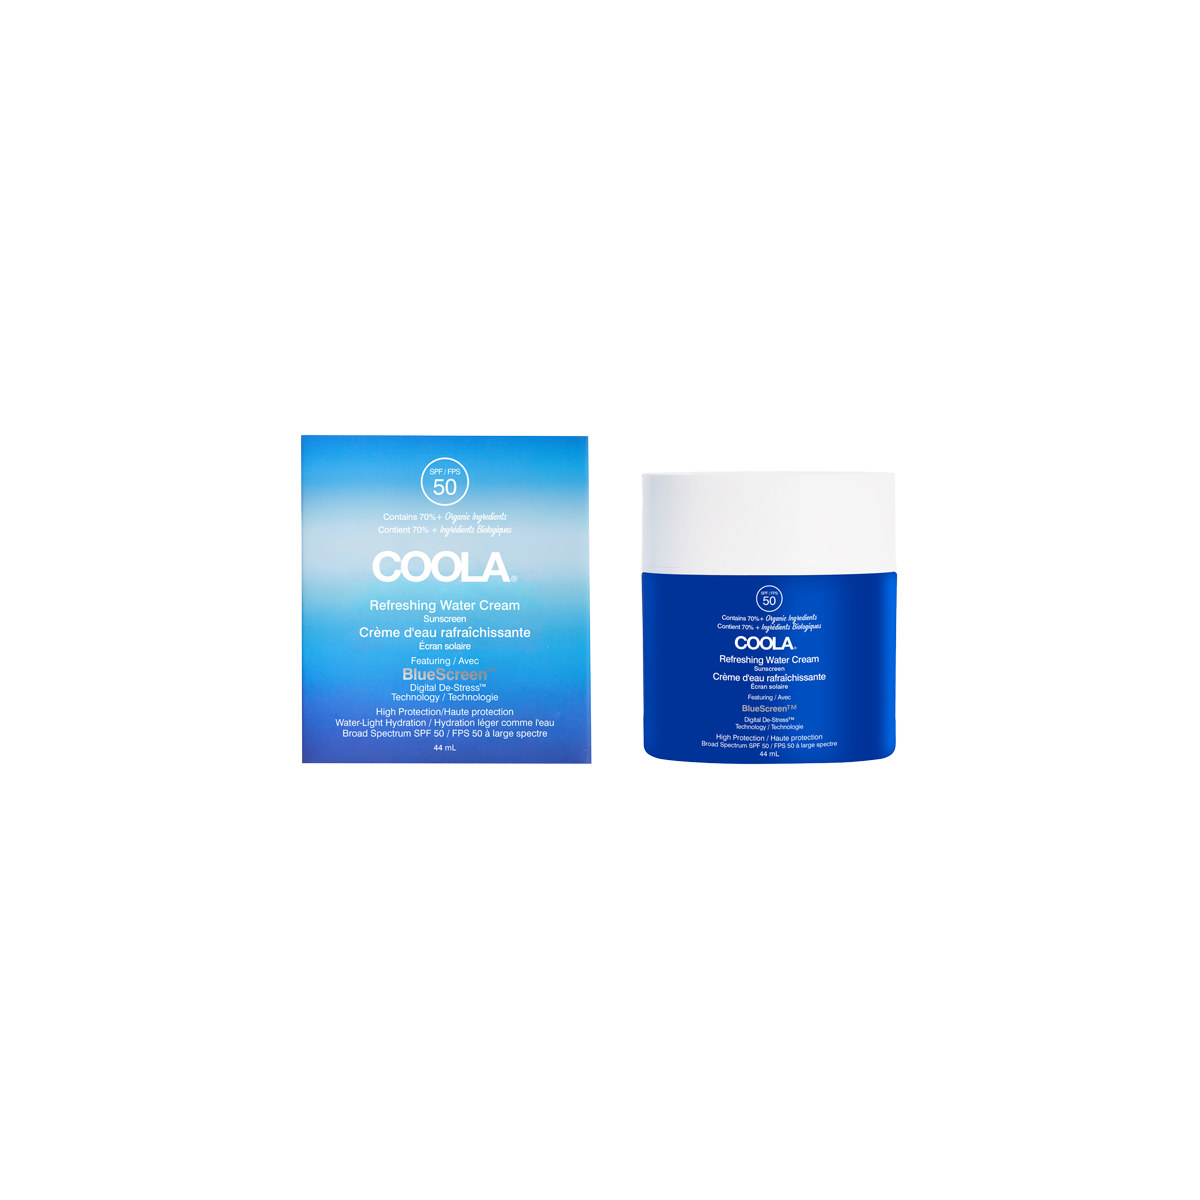 COOLA Suncare - Refreshing Water Cream SPF 50